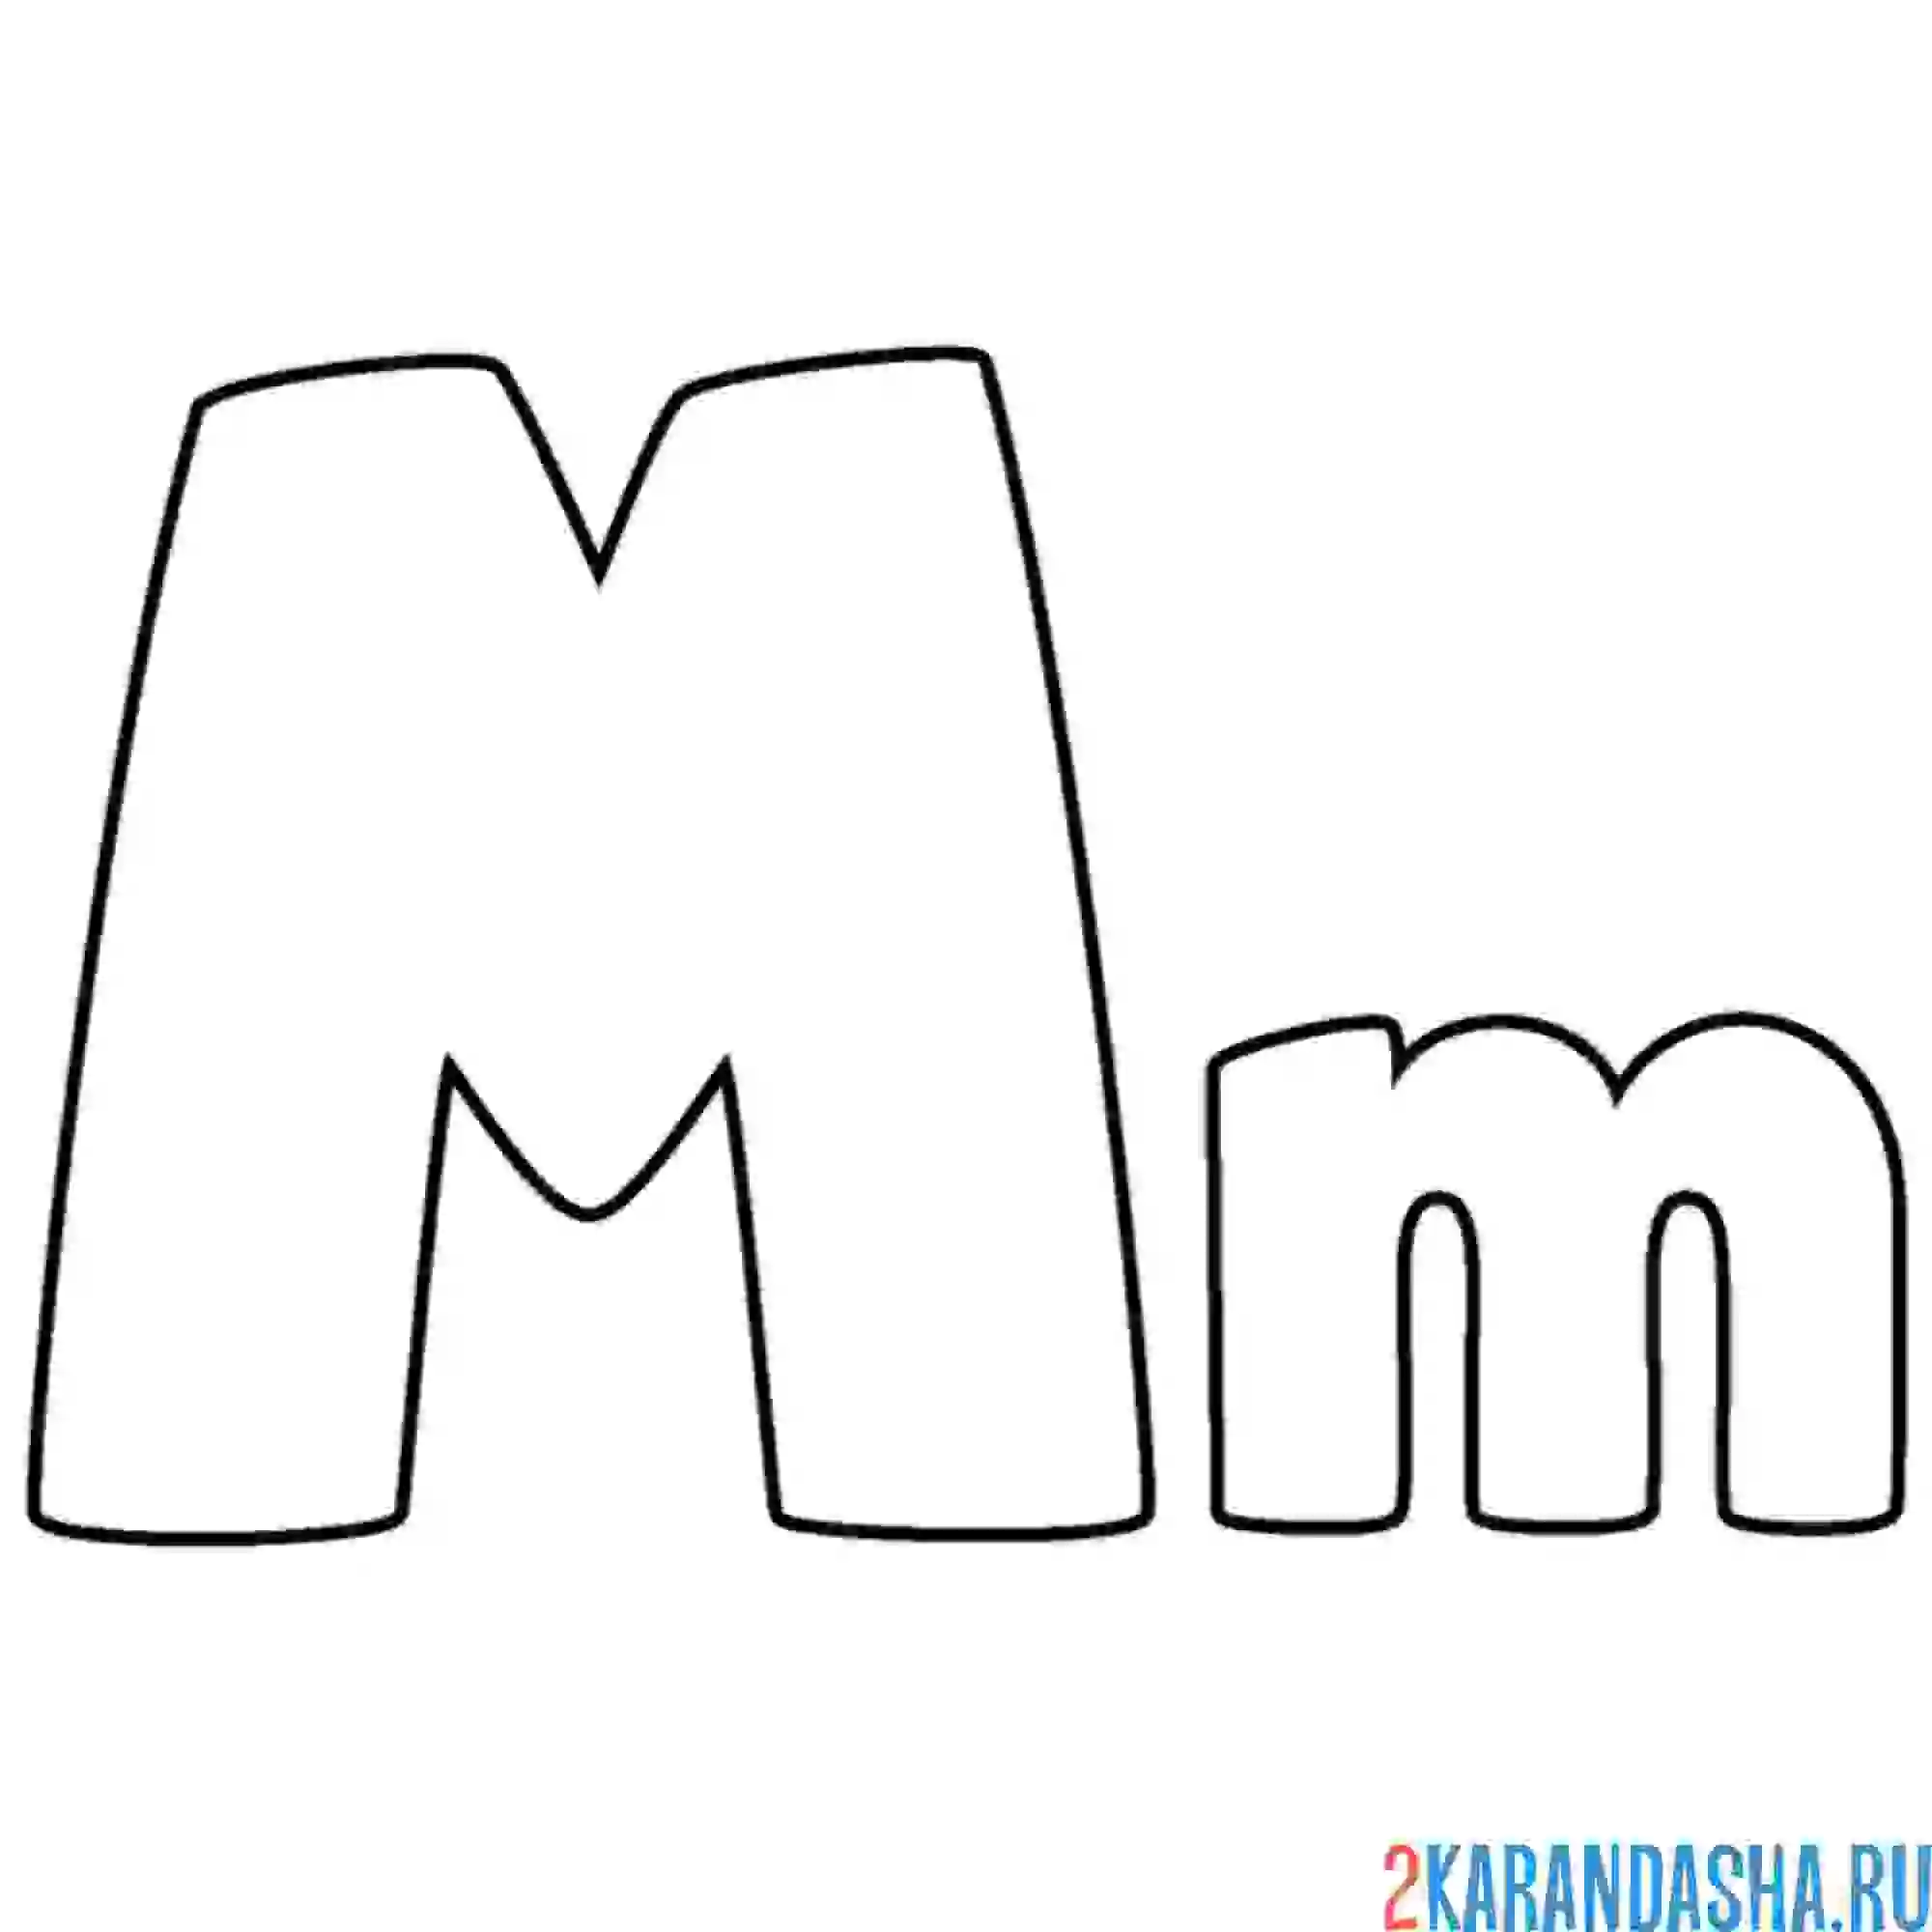 Раскраска буква m английского алфавита